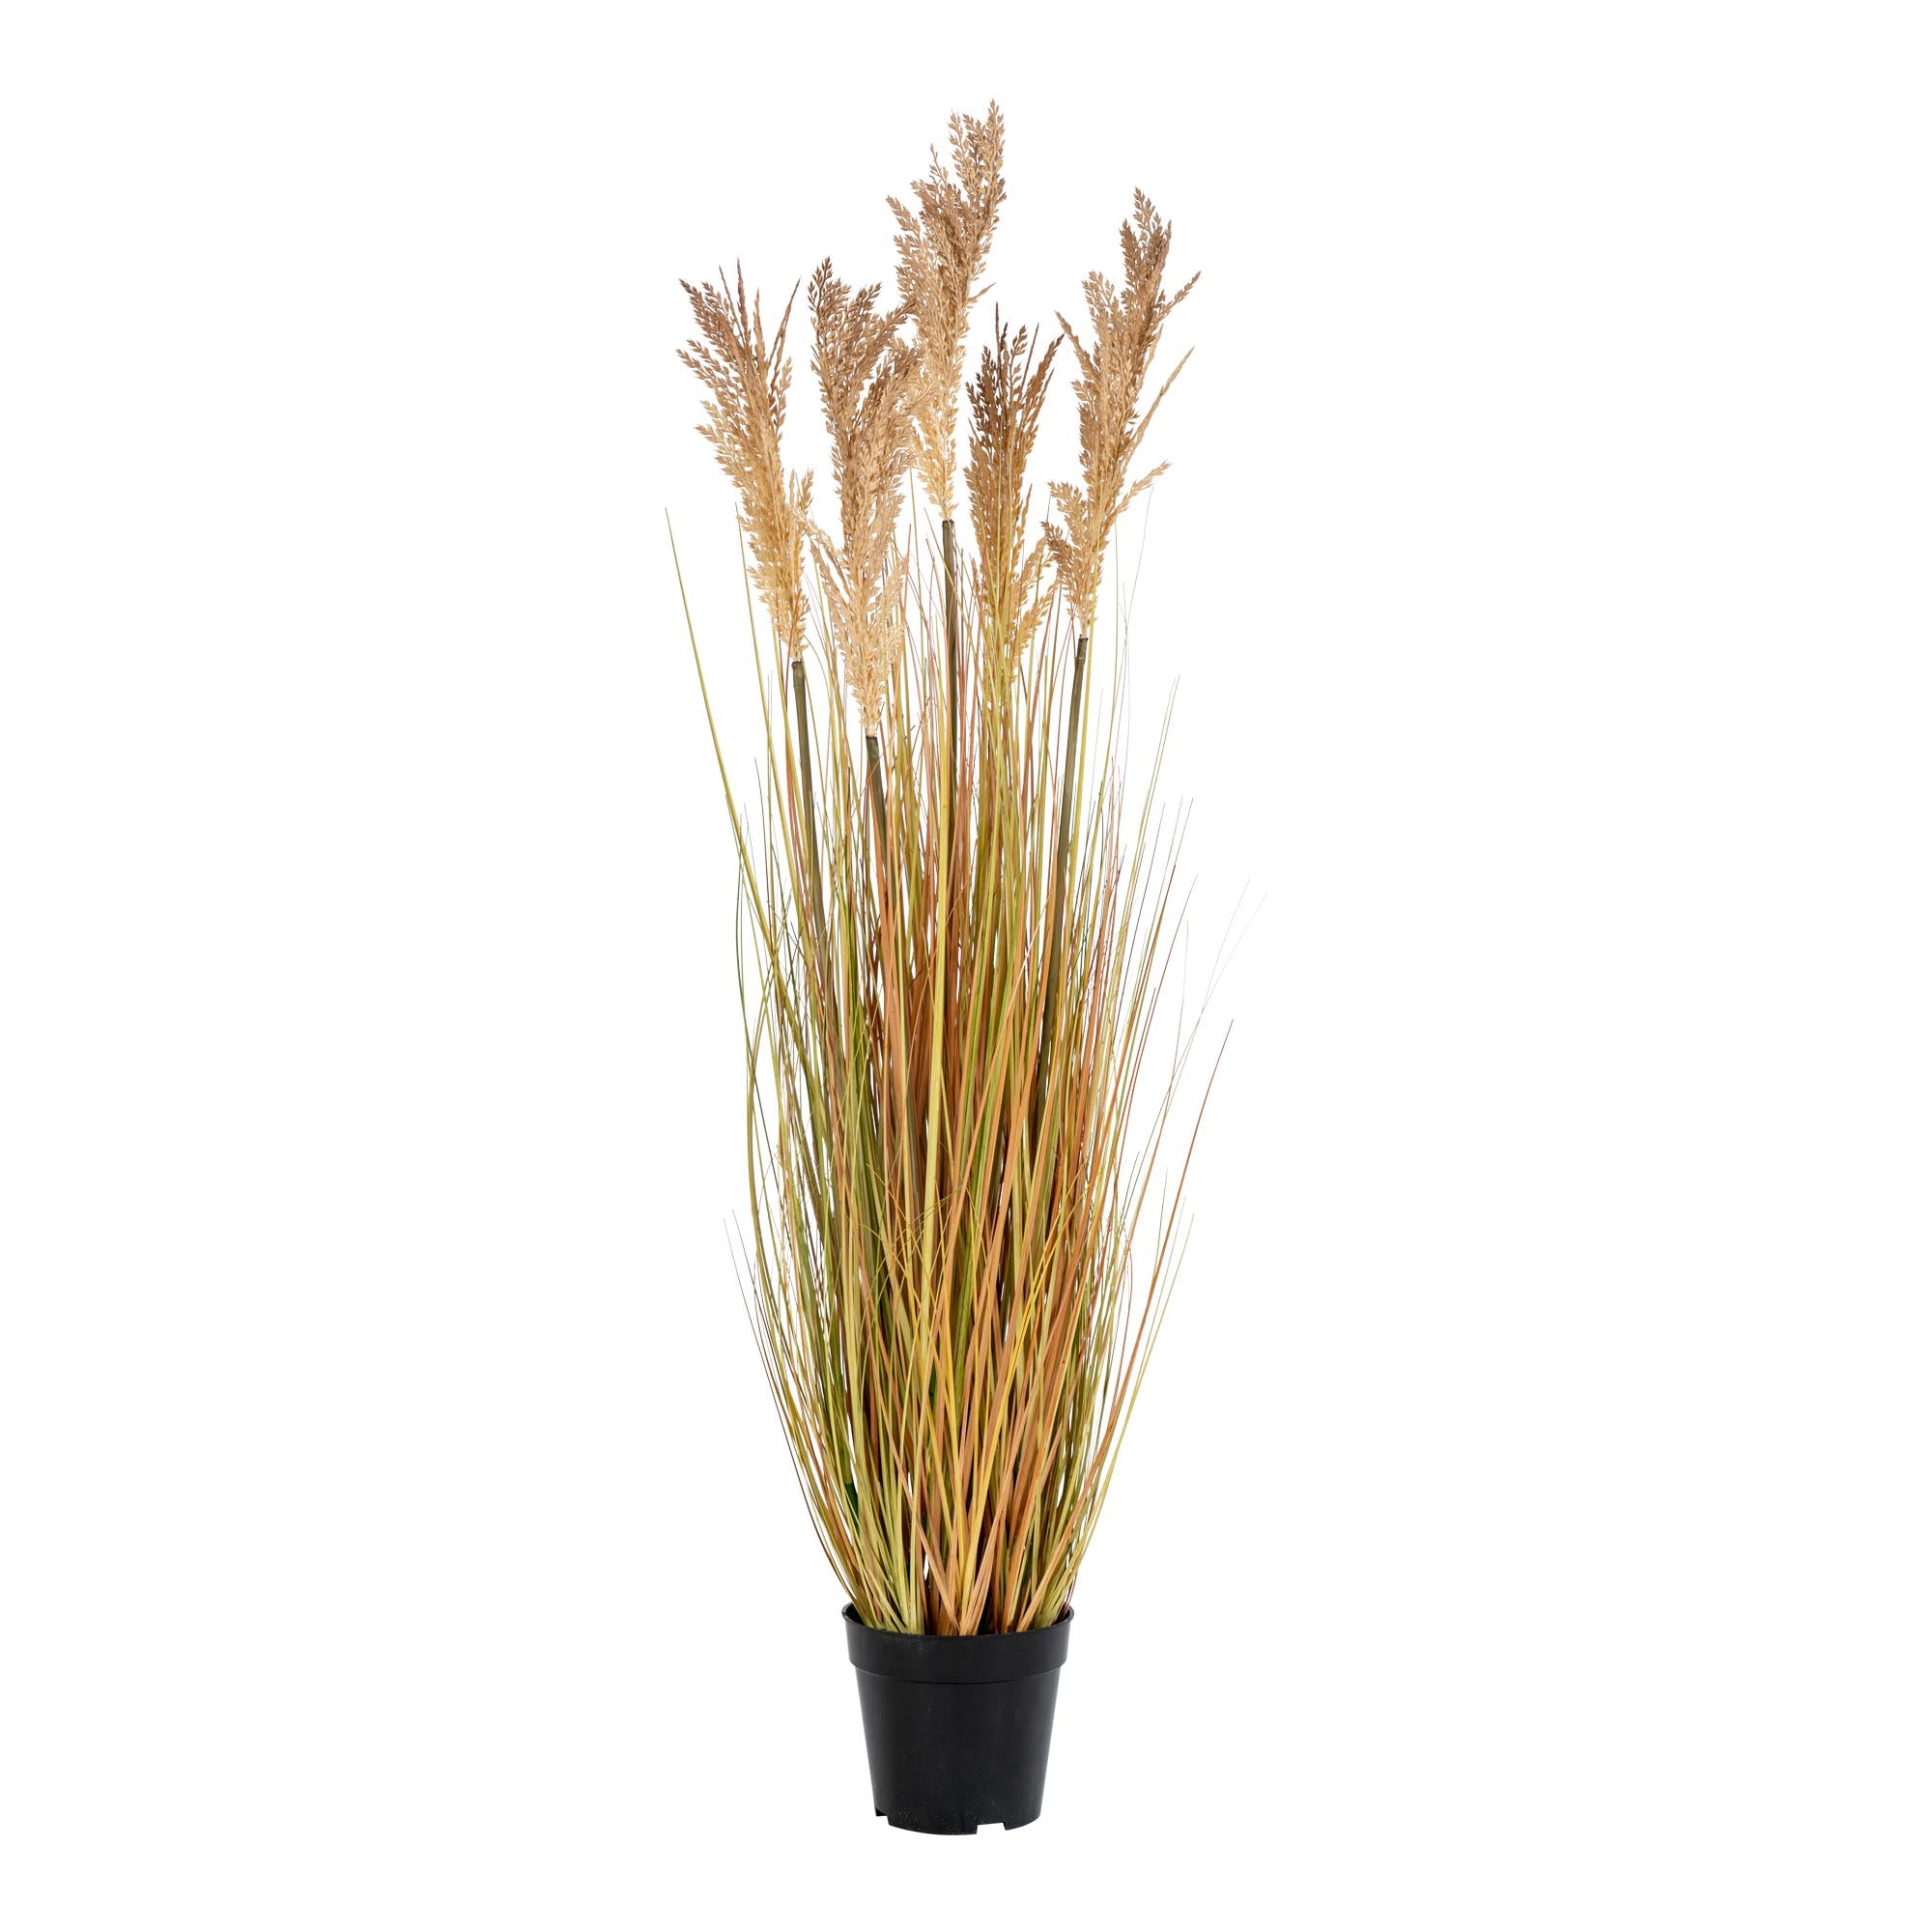 Sorghum Grass - Kunstig Plante, Natur, 110 Cm ⎮ 5713917008766 ⎮ 9501070 